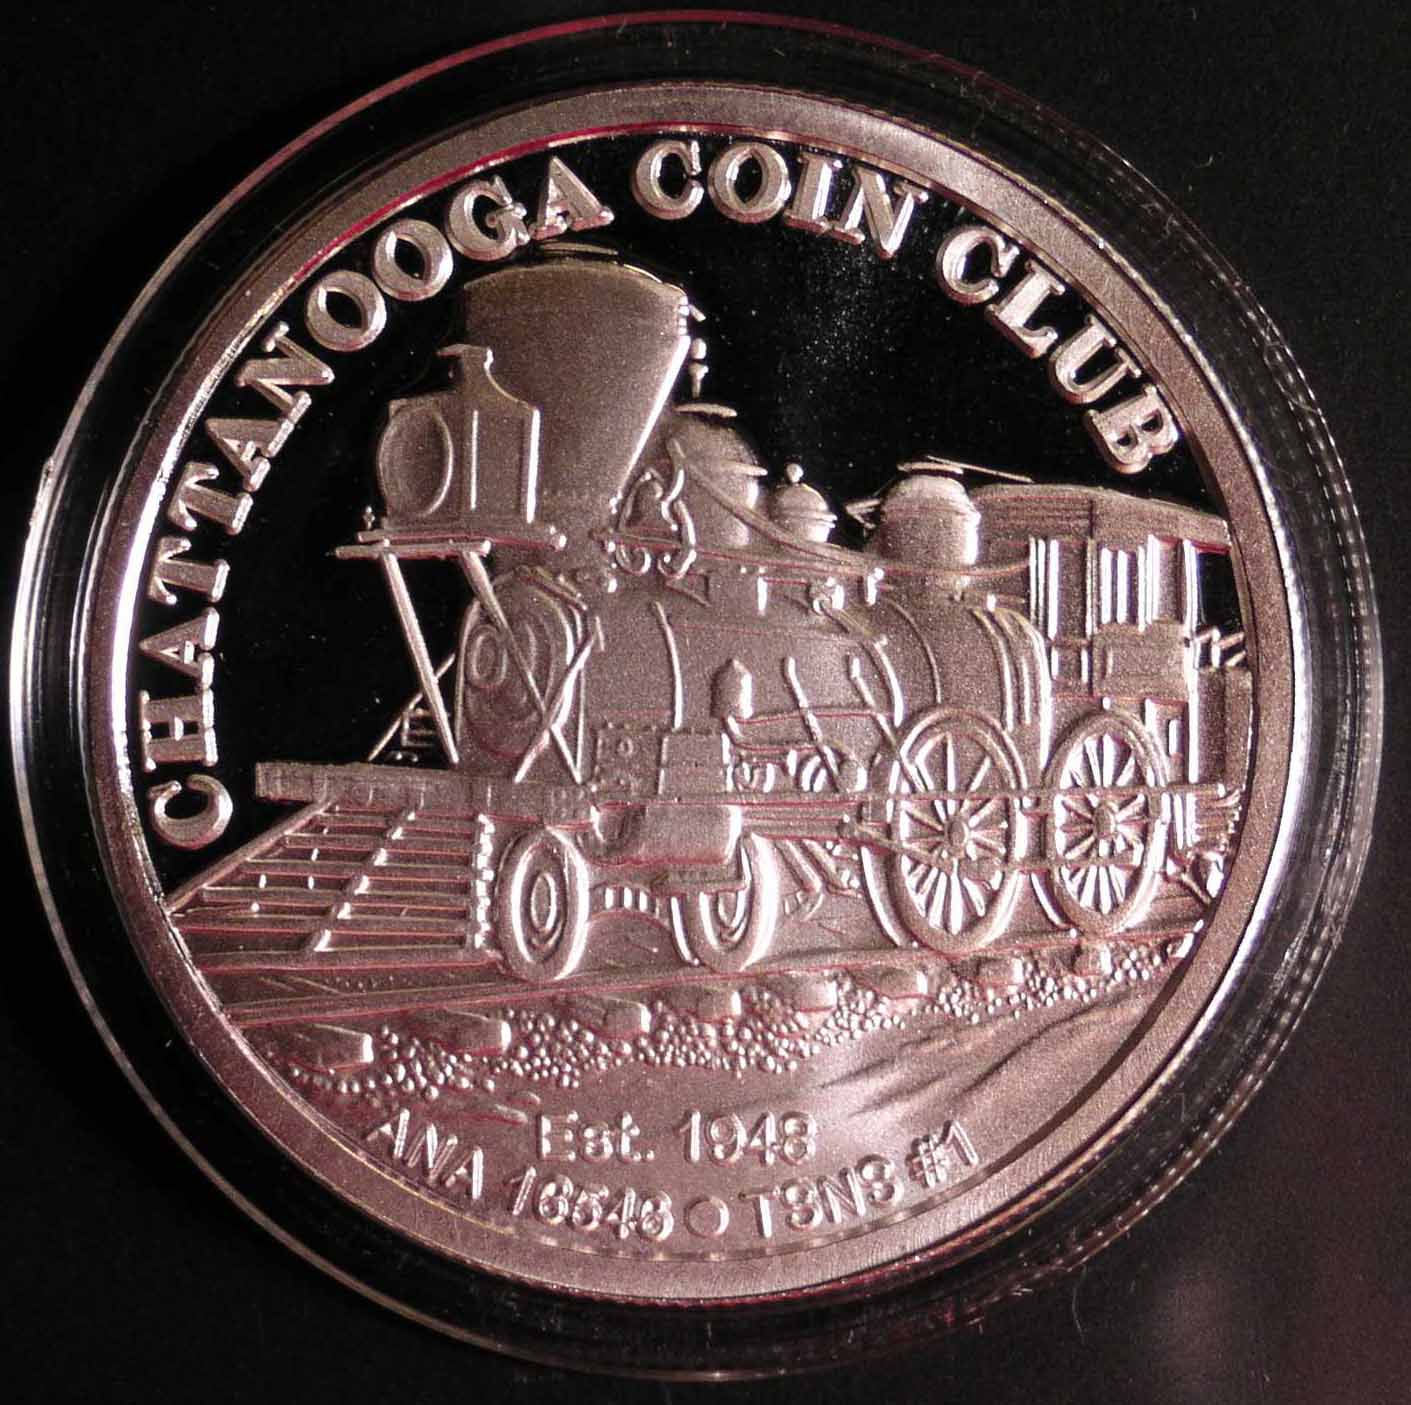 Club 50th Anniversery Medal